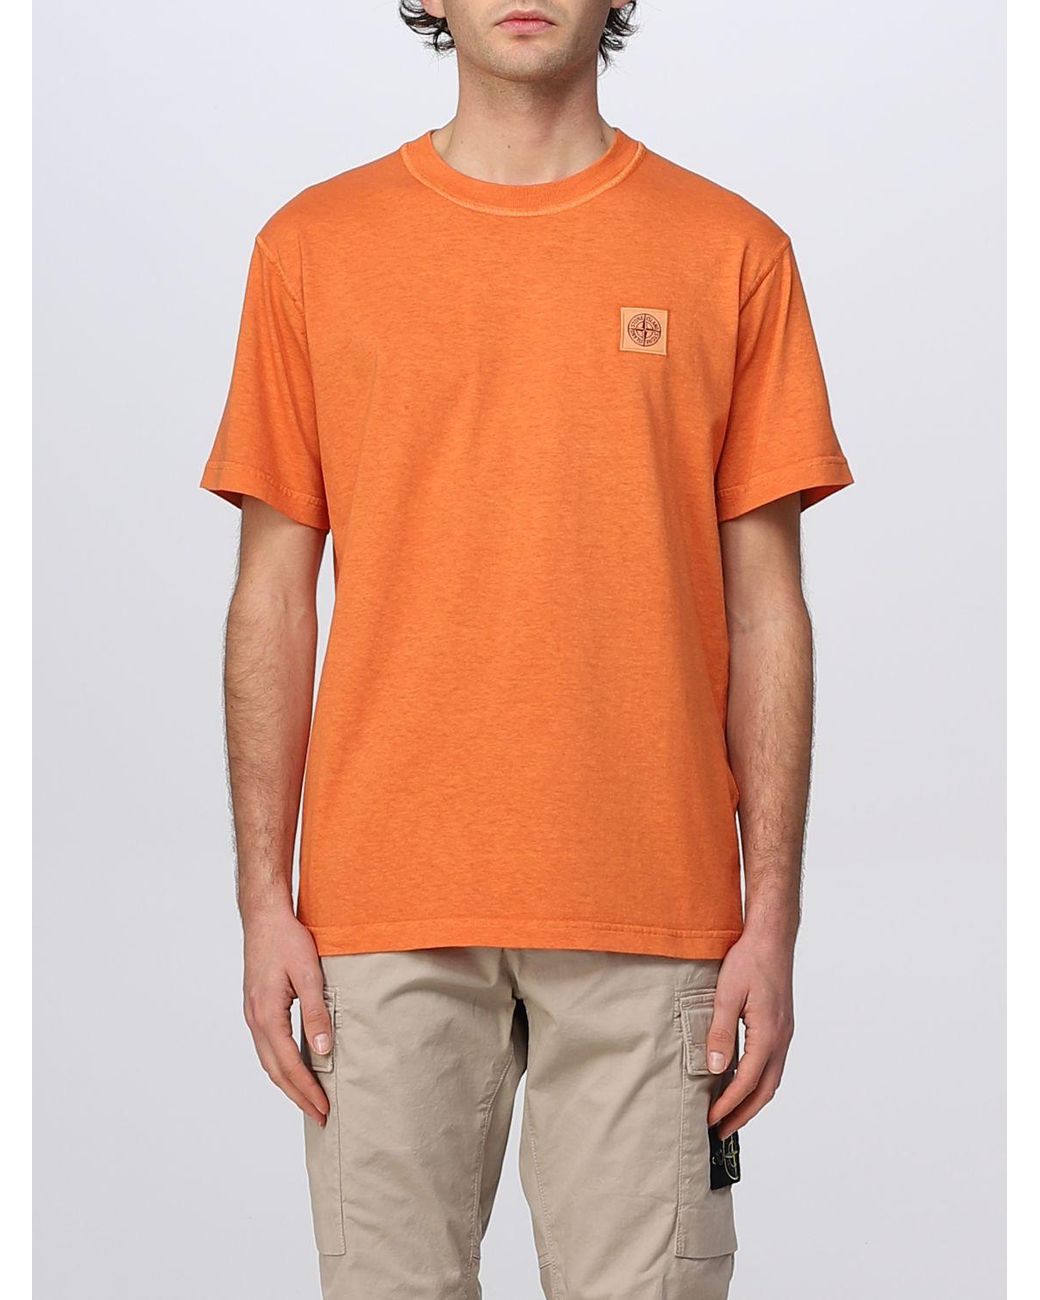 Stone Island T-shirt in Orange for Men | Lyst